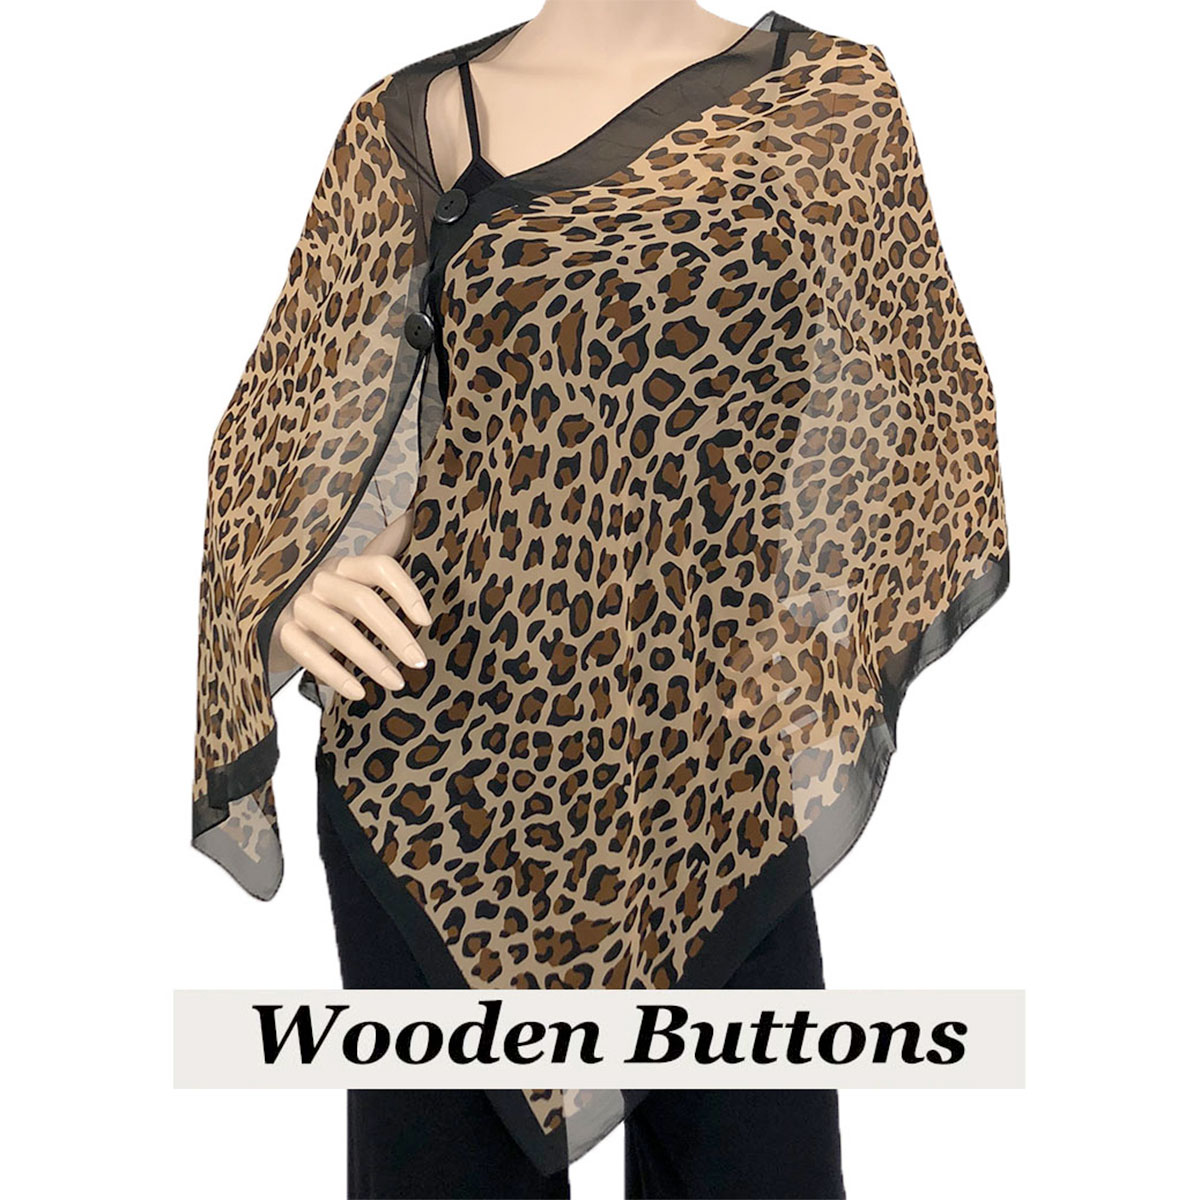 SBW-104BK Black Wooden Buttons<br> Cheetah Print Black Border